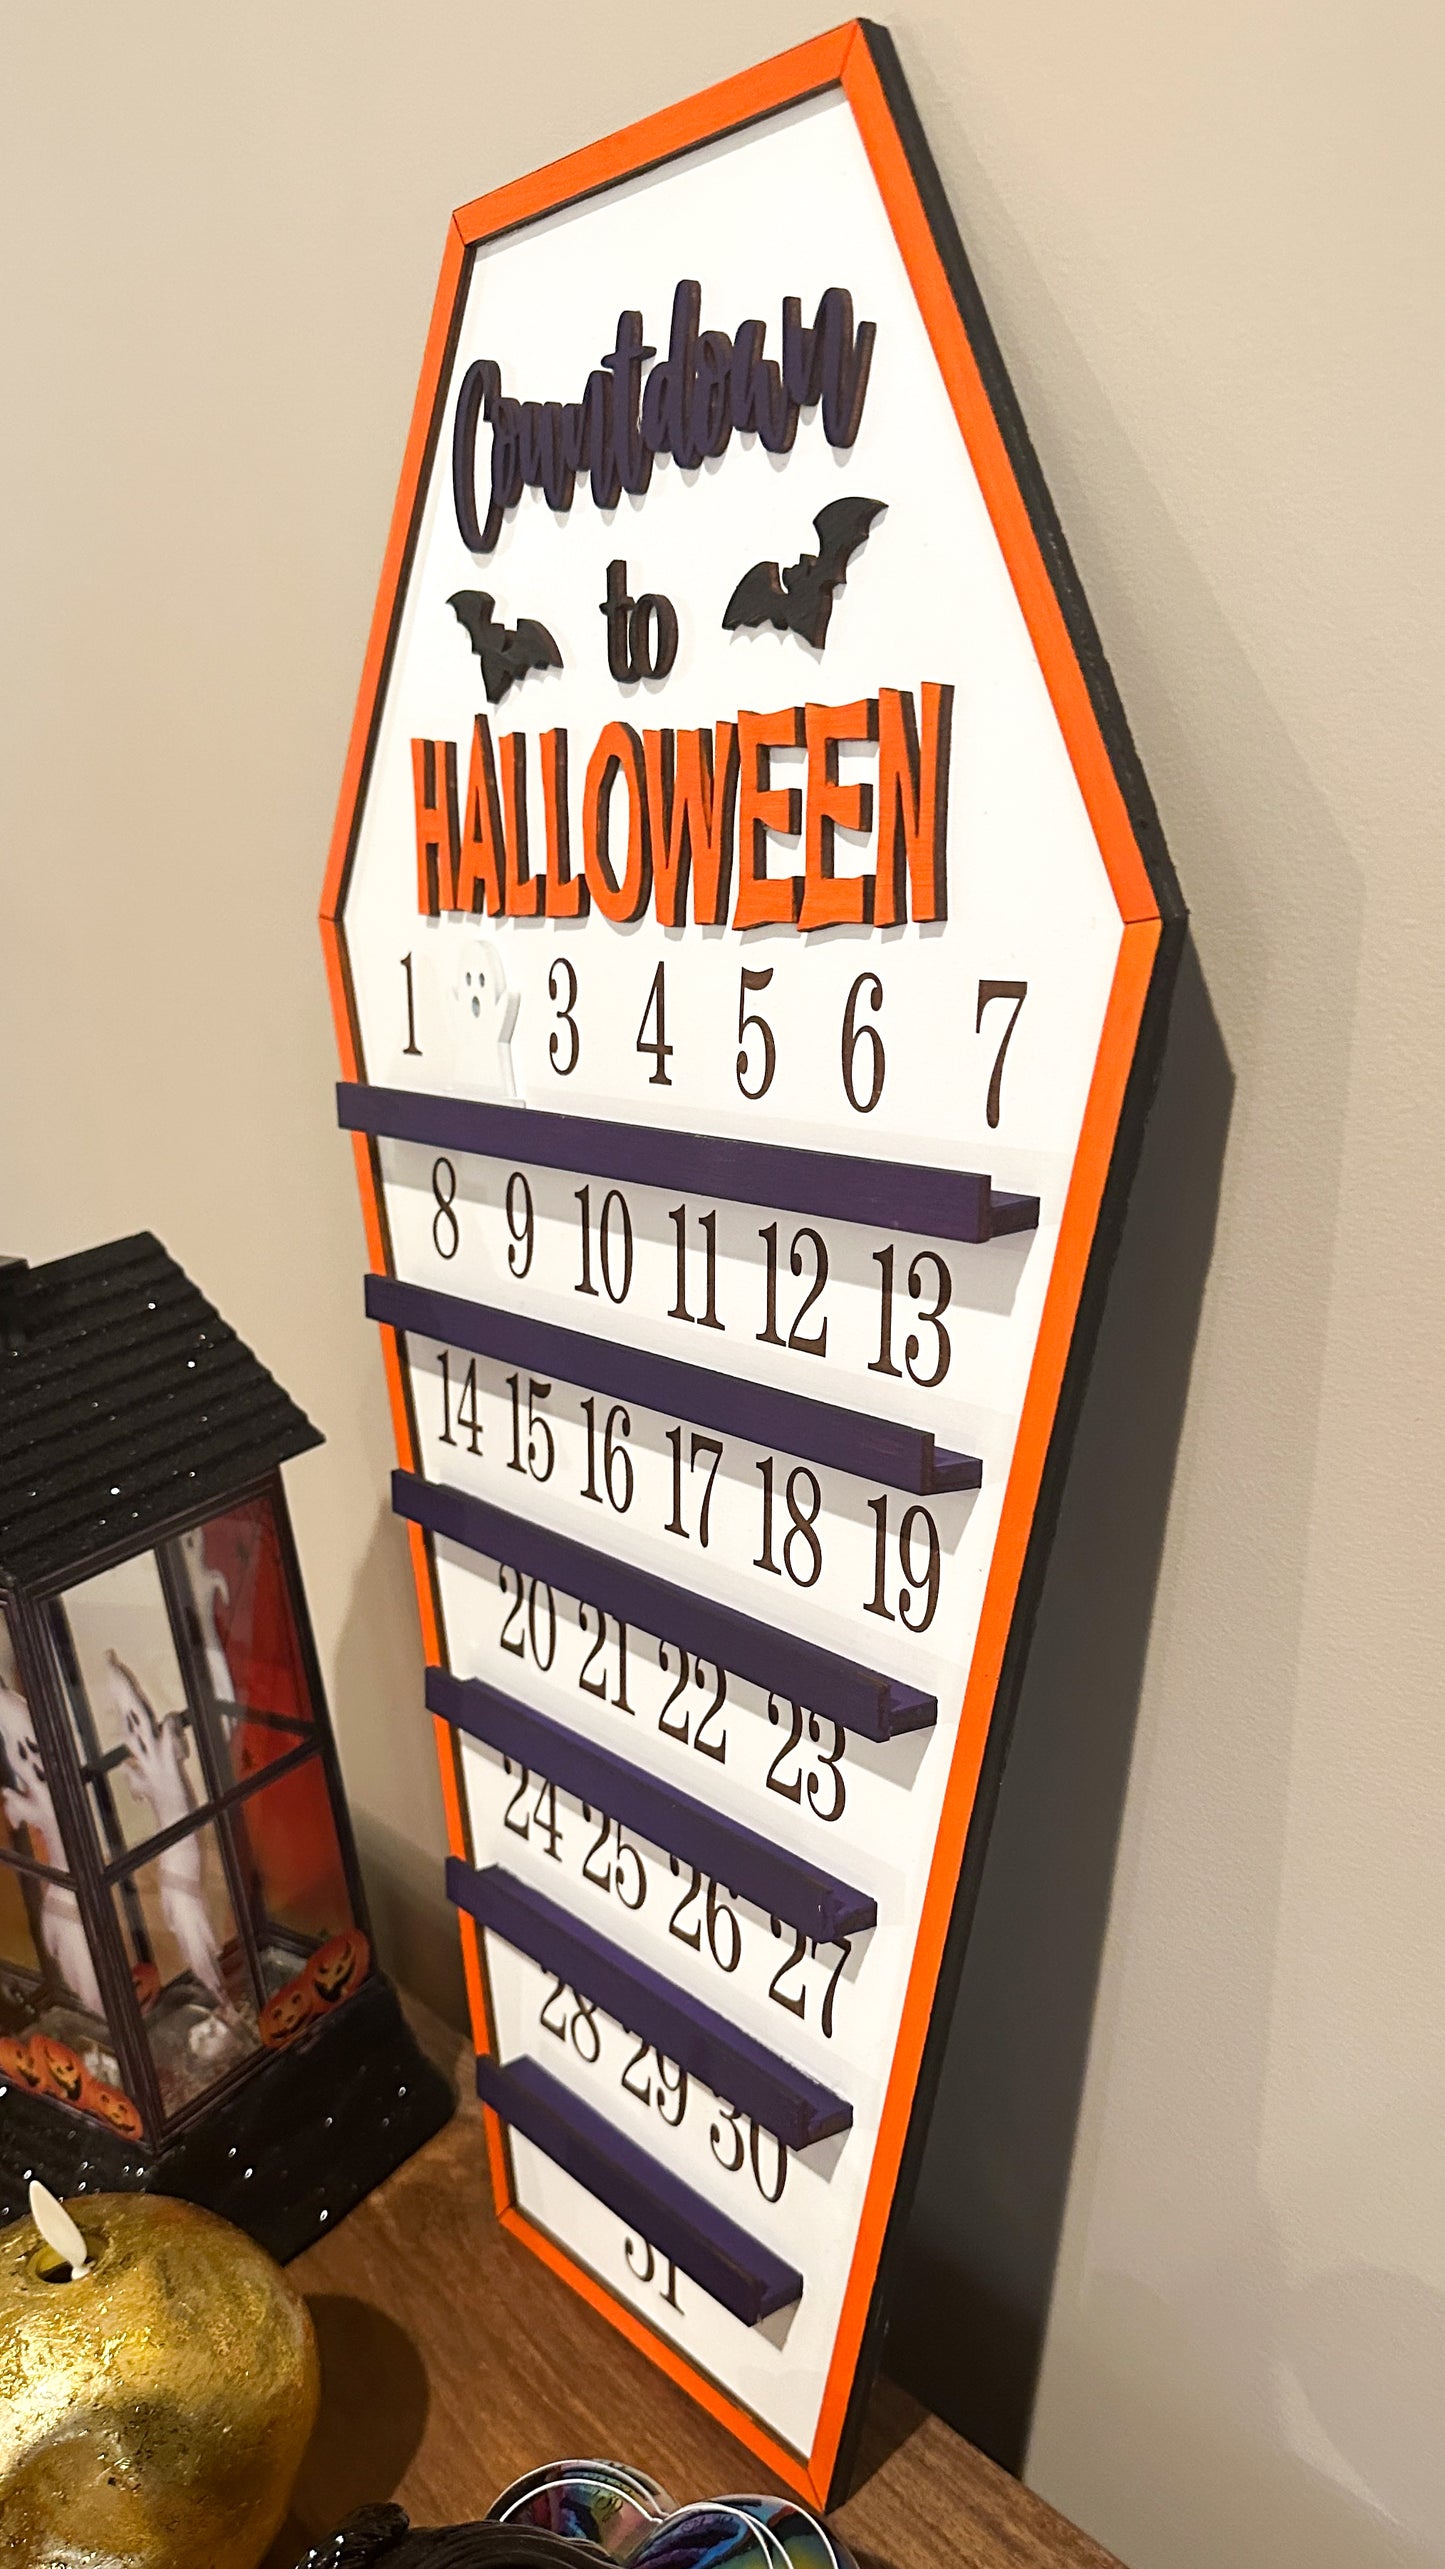 Countdown to Halloween | Coffin | Halloween Decor